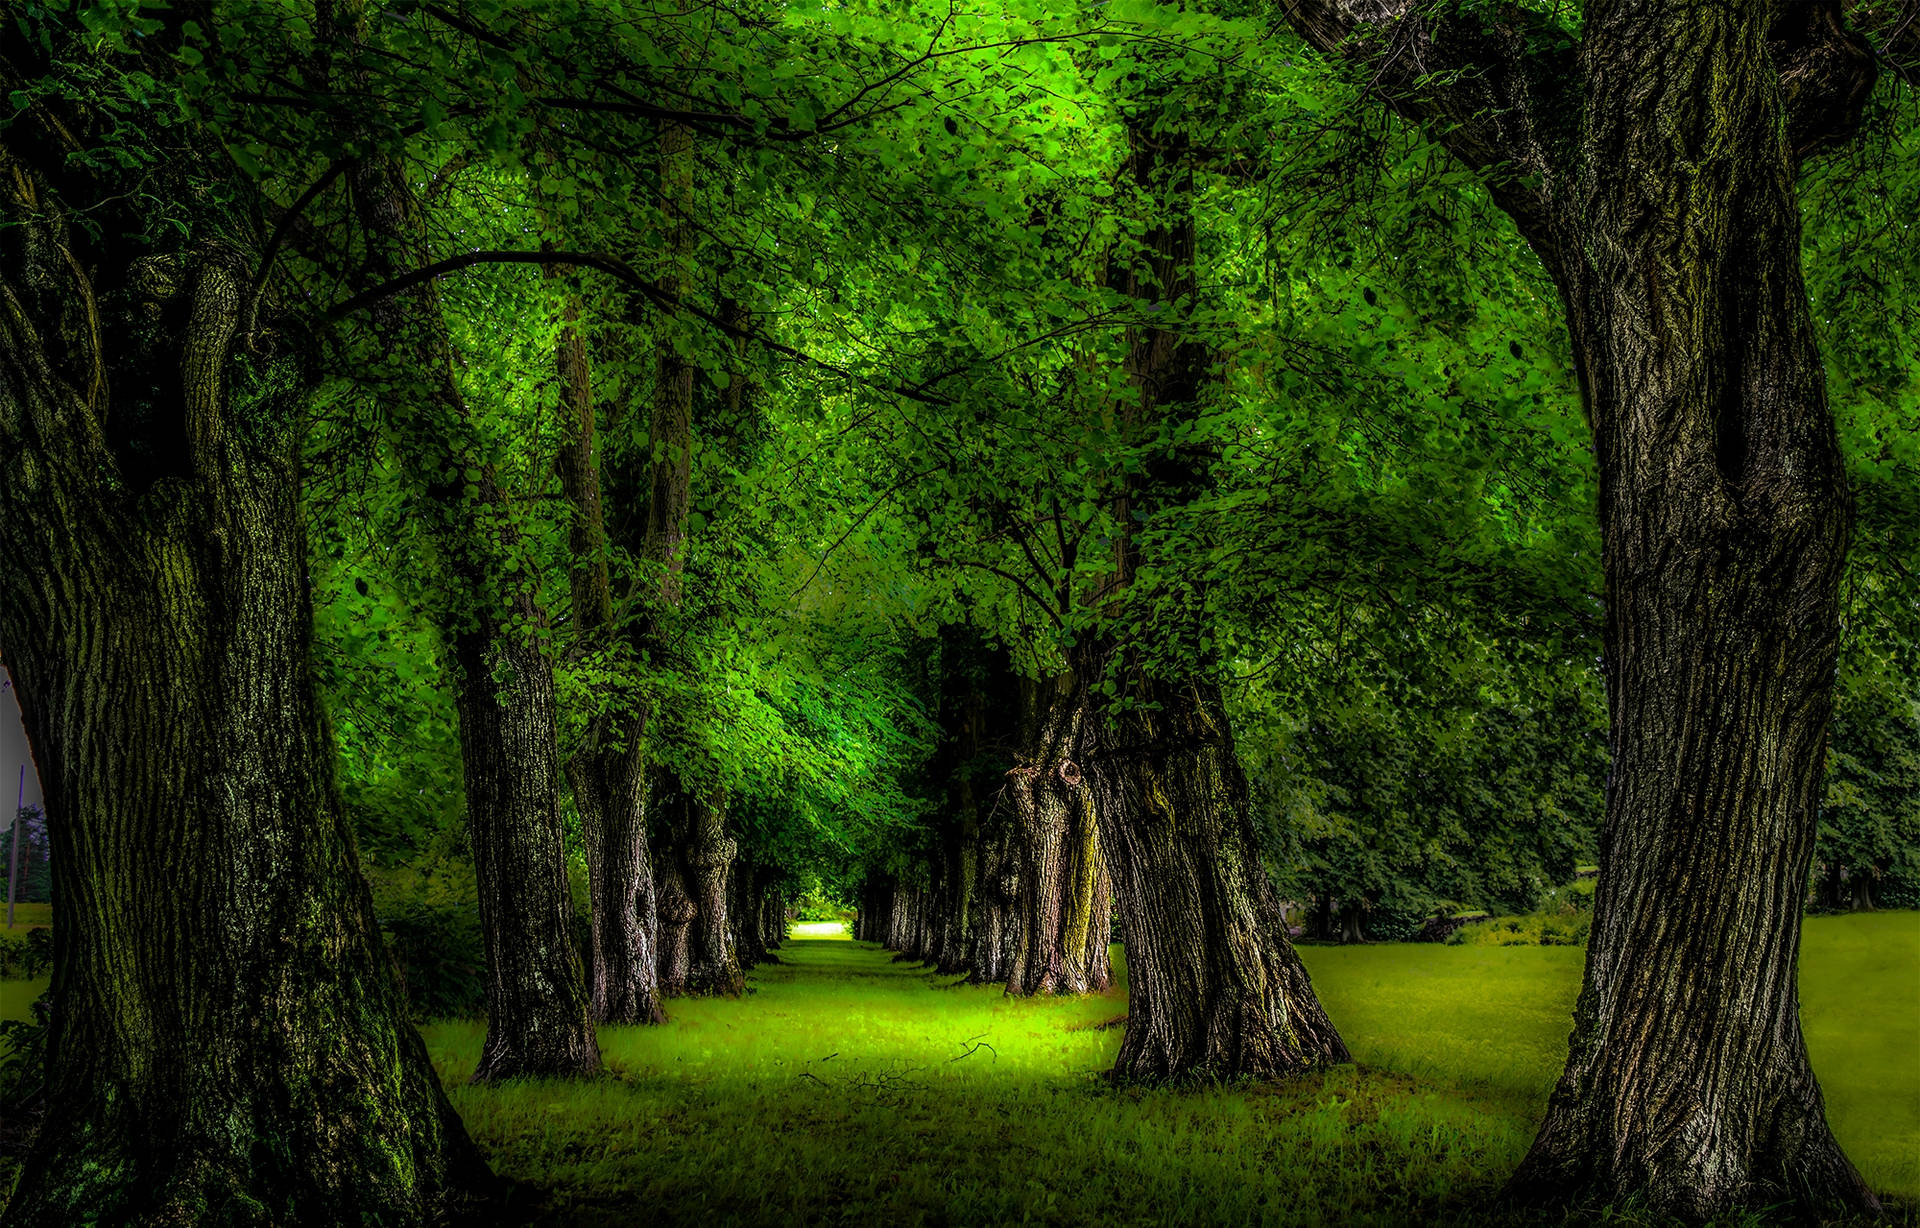 Top 999+ Green Tree Wallpaper Full HD, 4K✅Free to Use